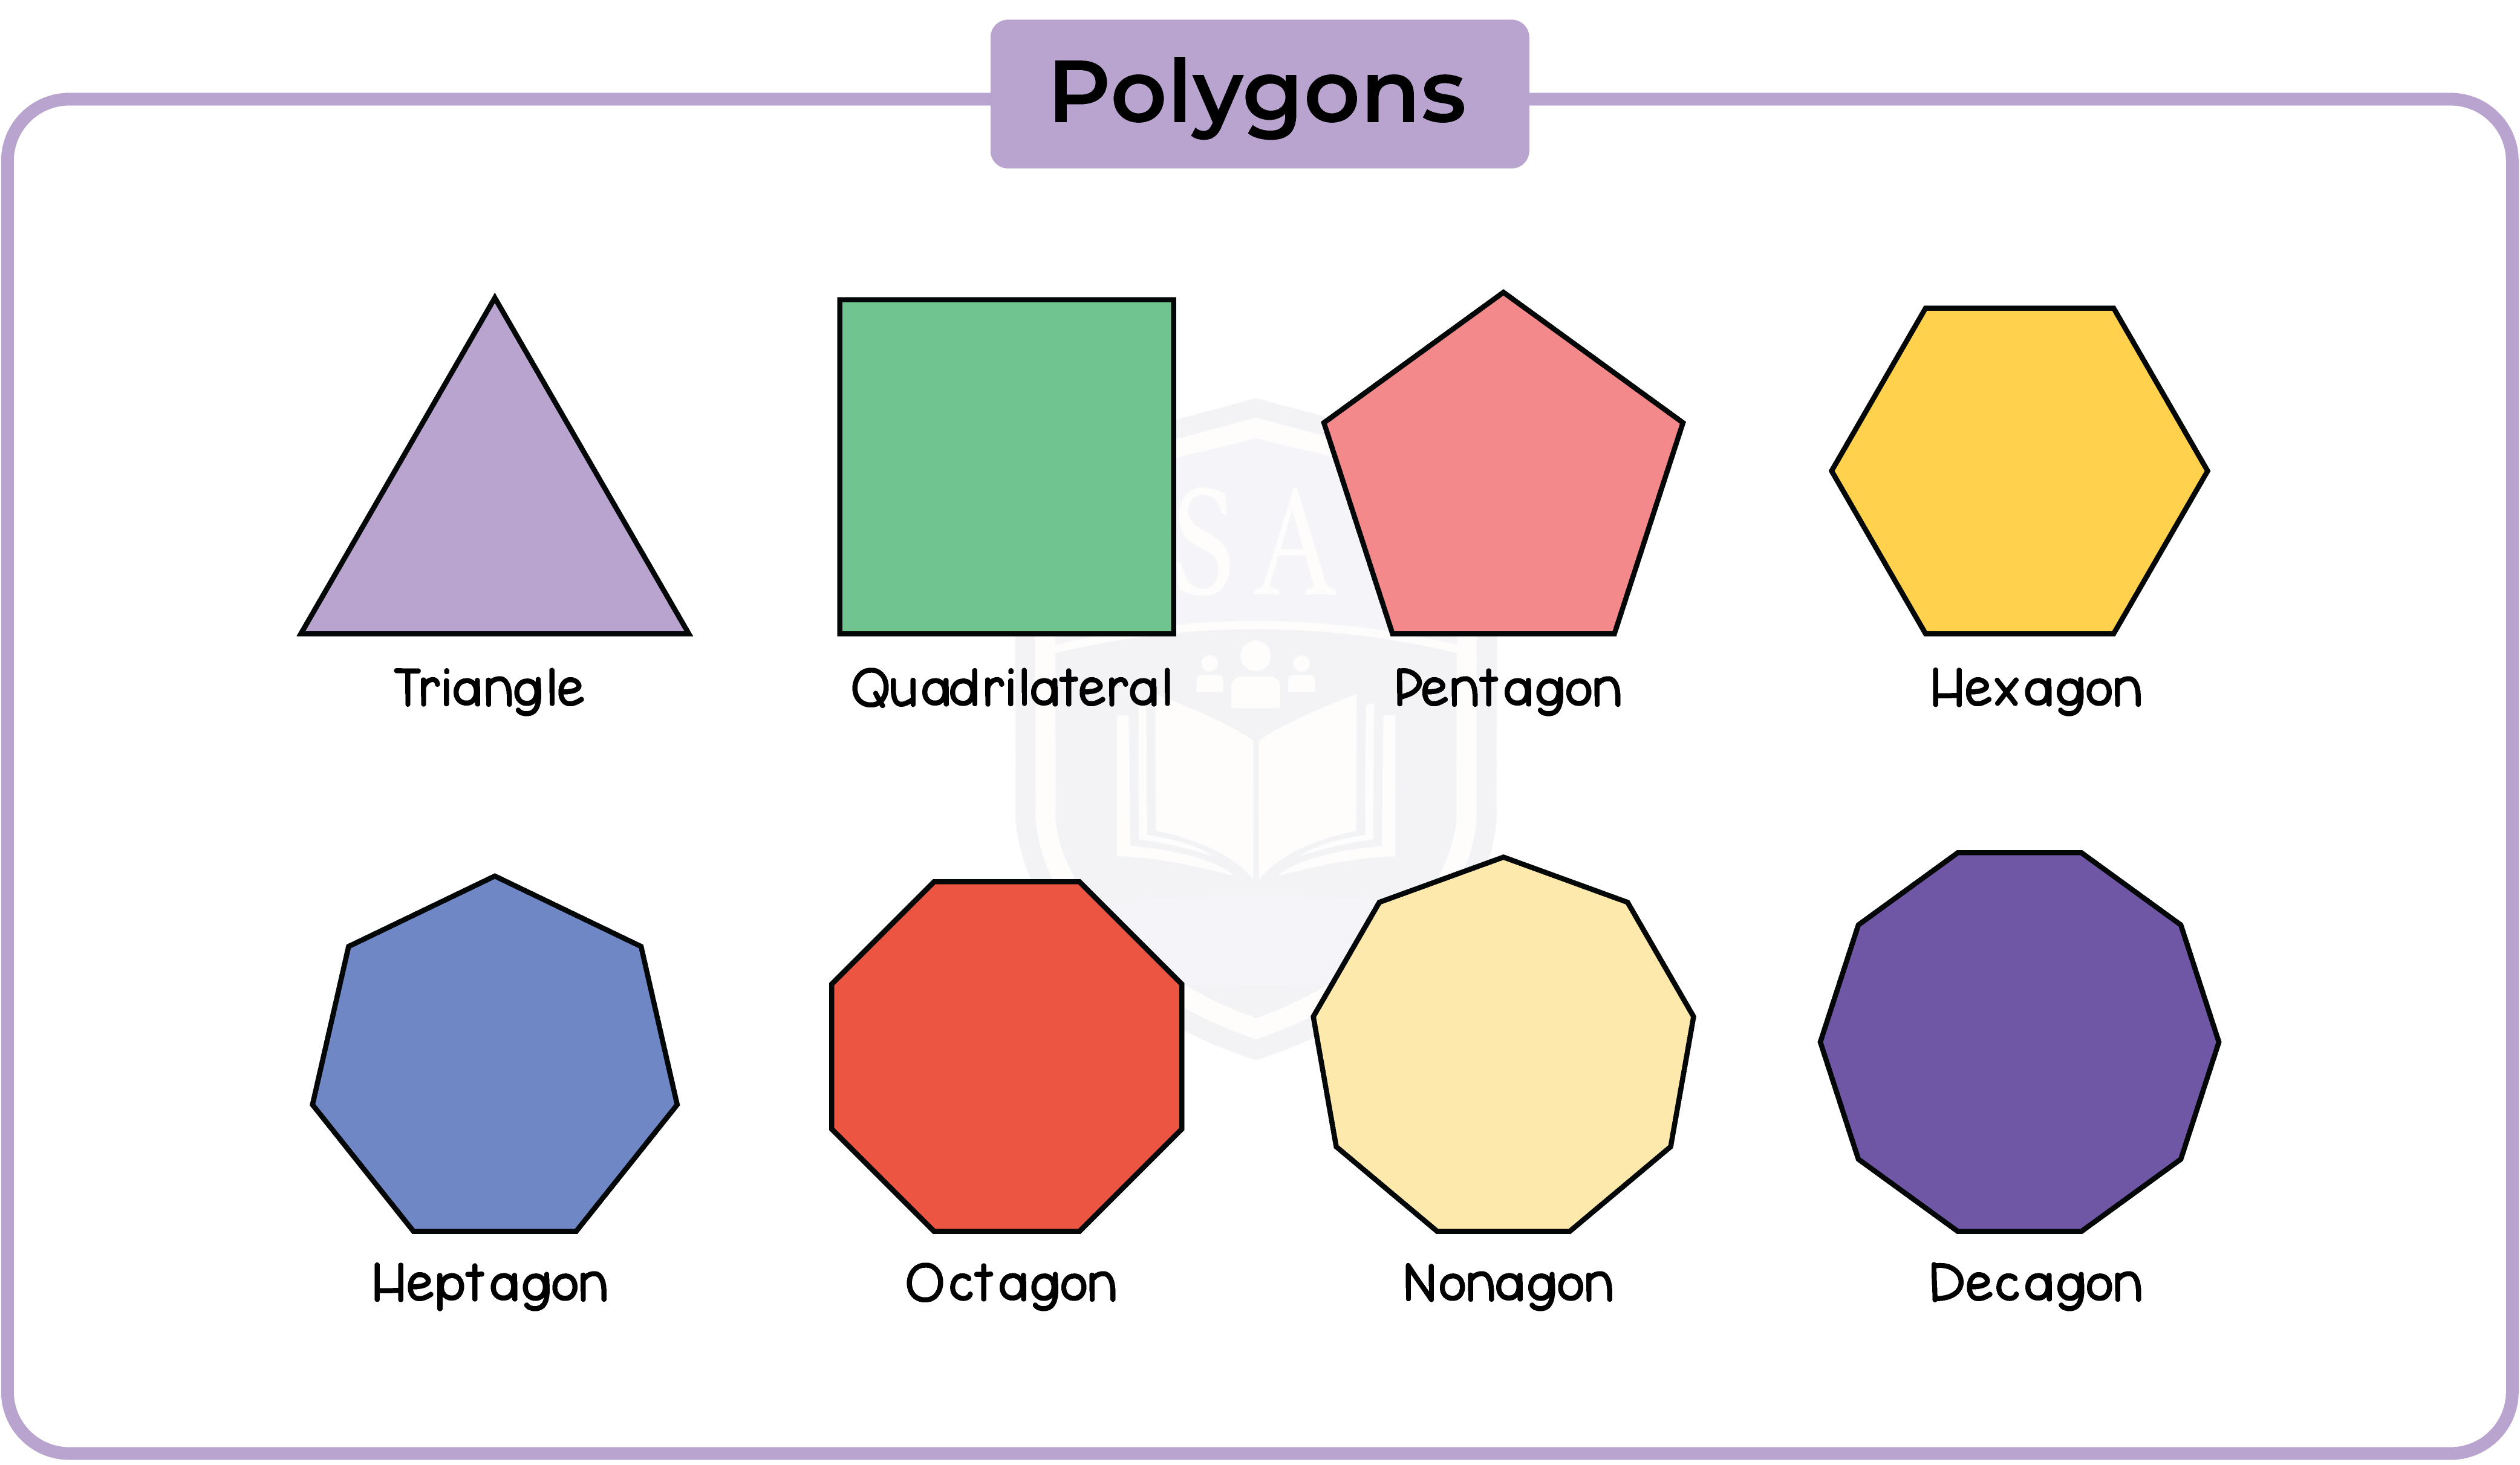 edexcel_igcse_mathematics a_topic 26_polygons_002_Polygons